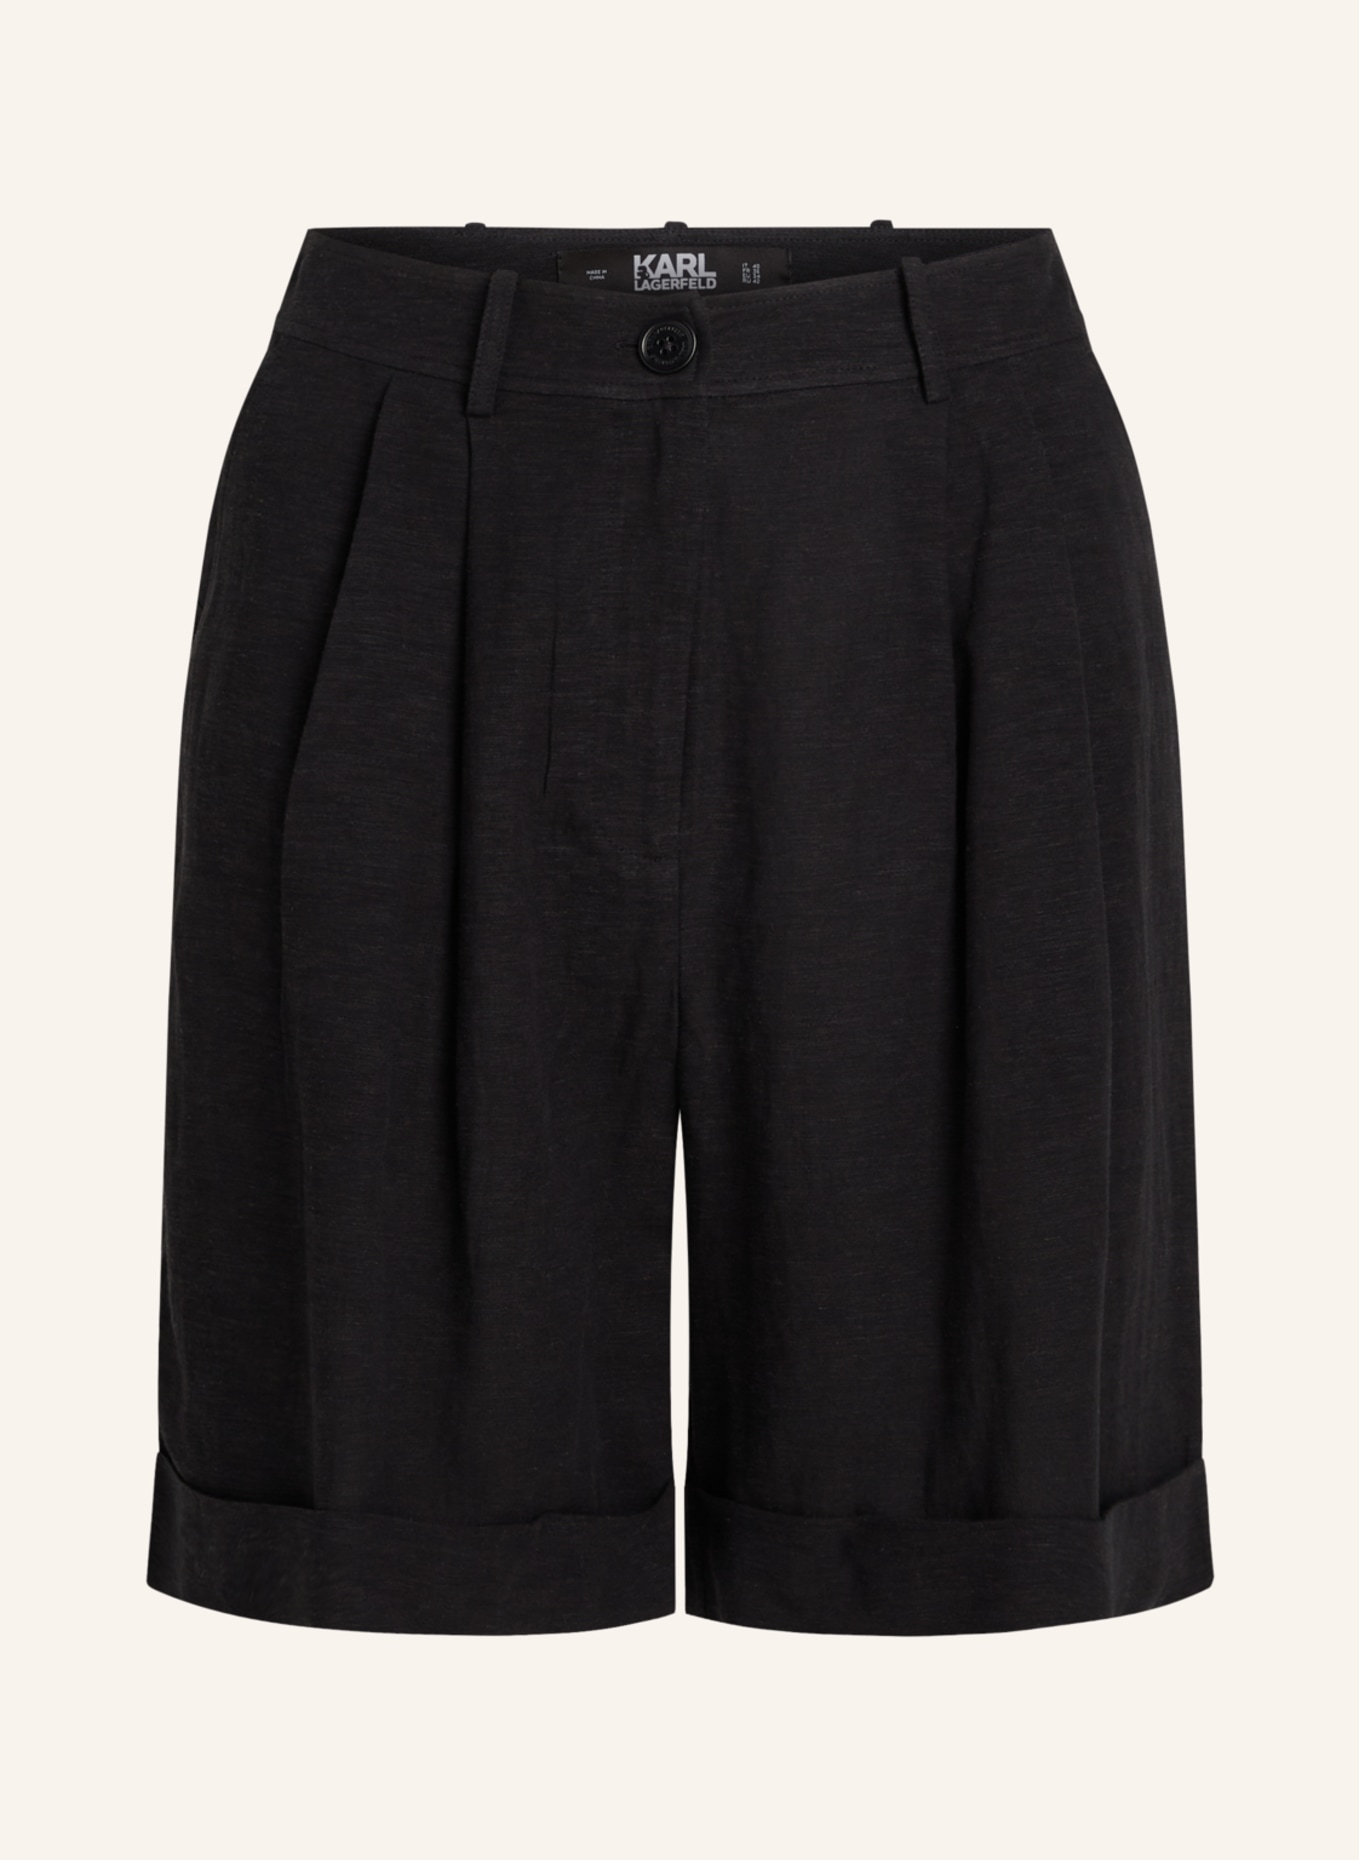 KARL LAGERFELD Shorts, Farbe: SCHWARZ (Bild 1)